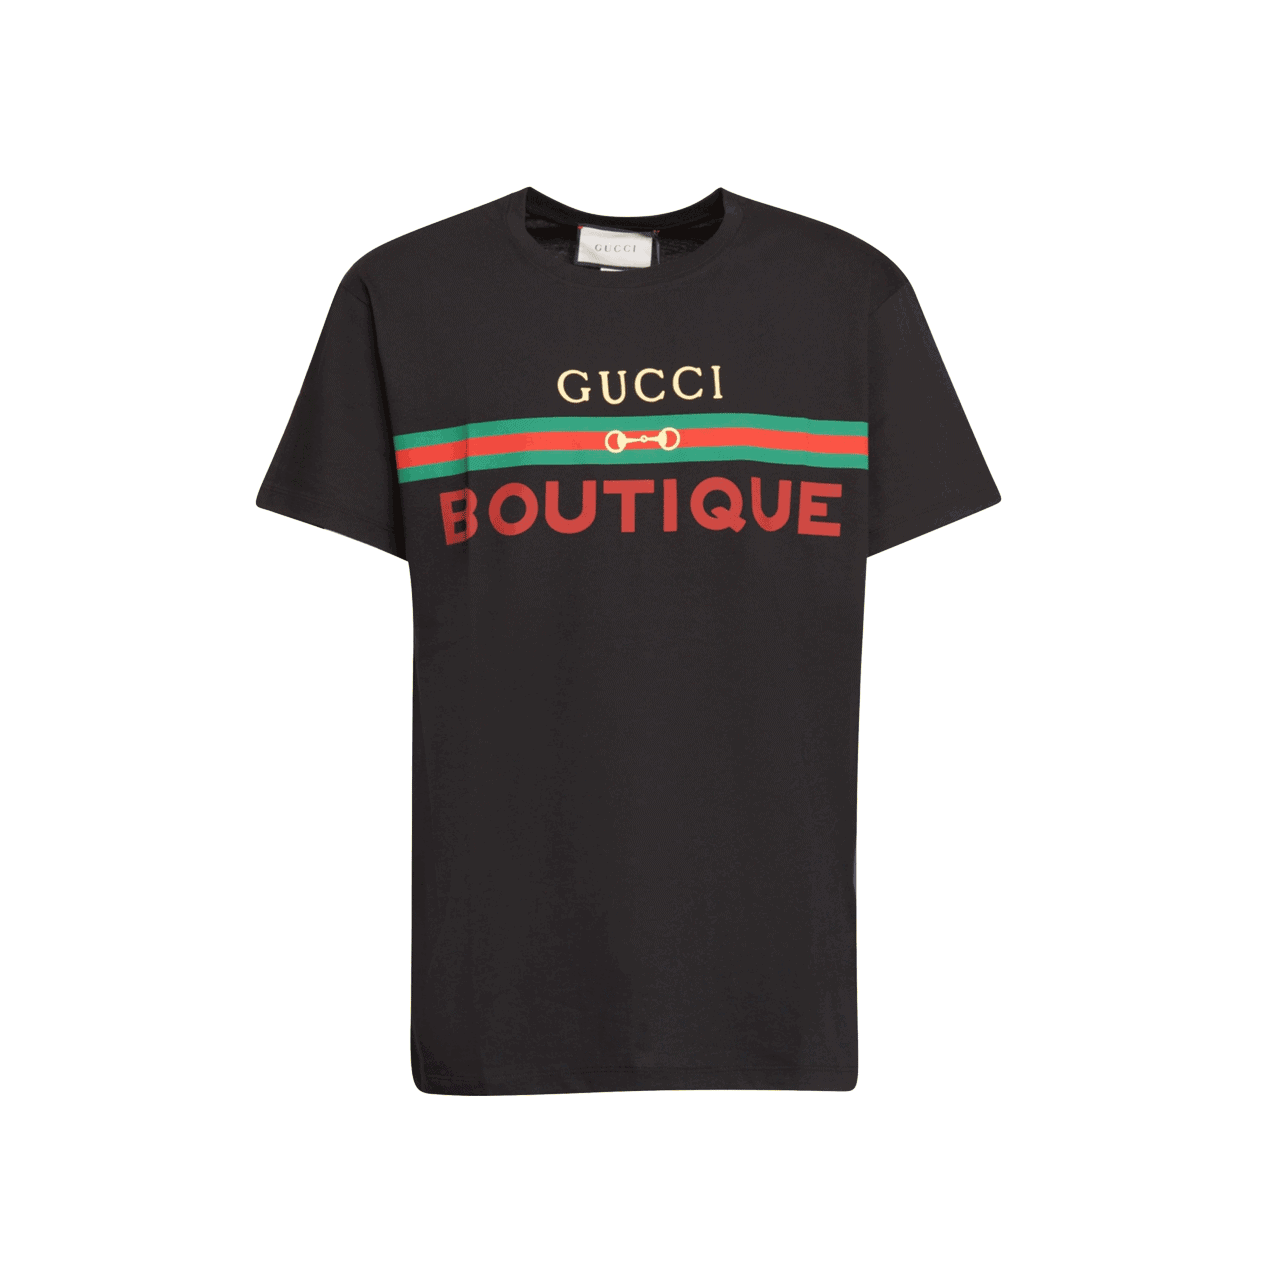 GUCCI BOUTIQUE T-SHIRT CLOTHING - GC90 - RepGod